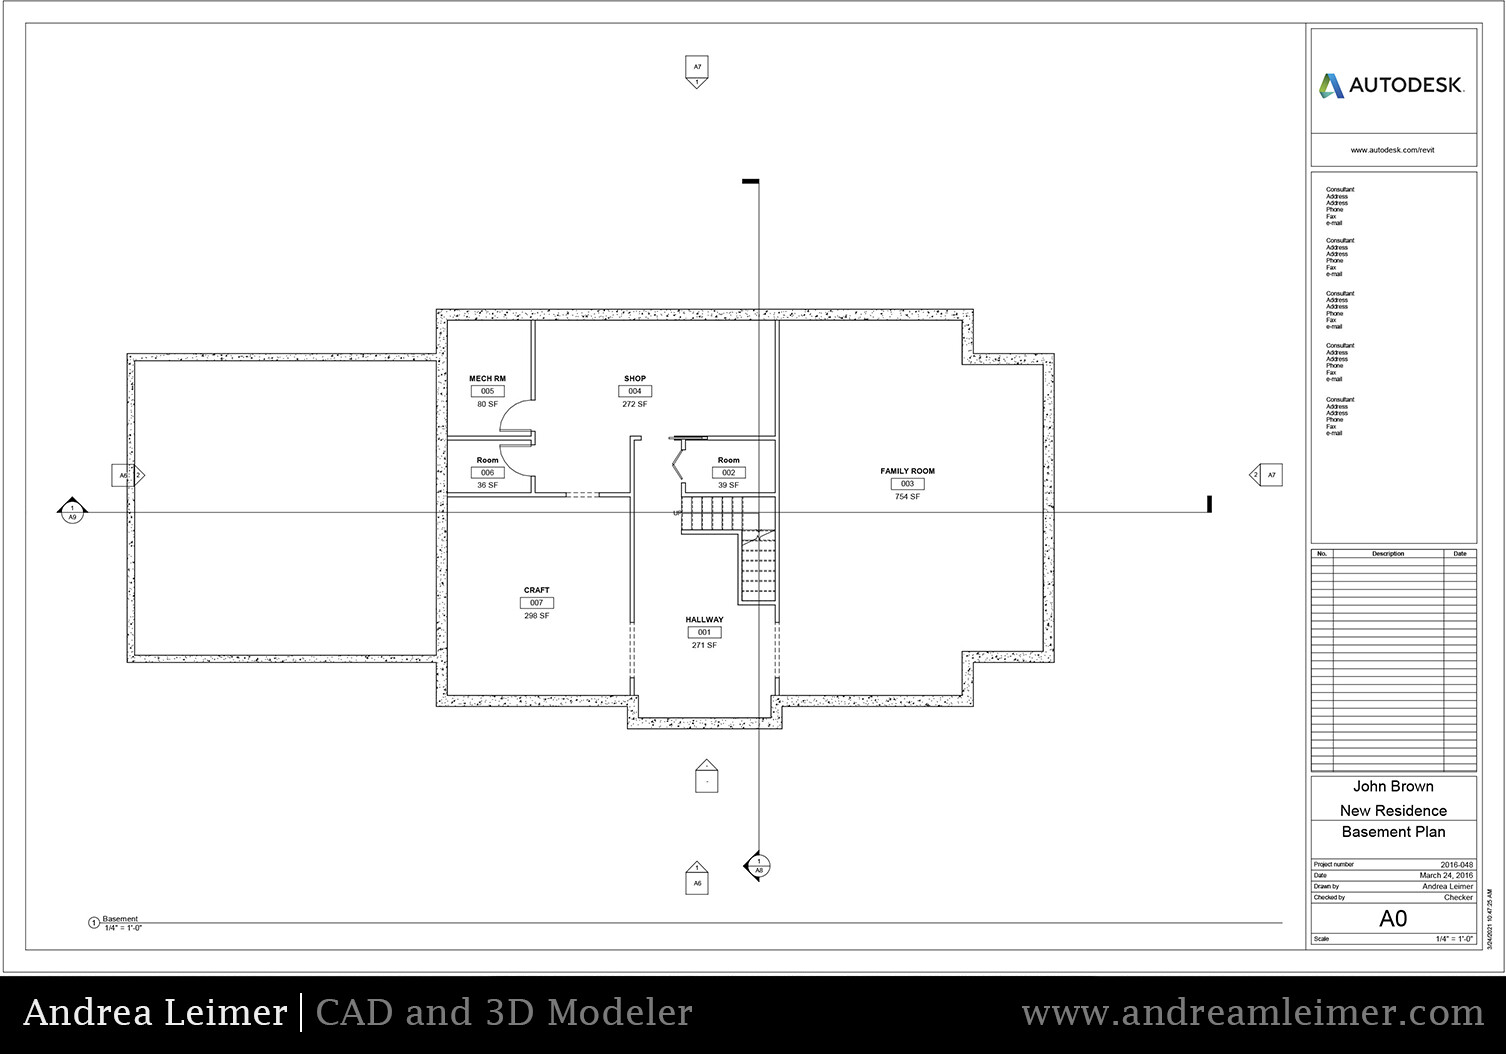 Architectural CAD A0 Basement Plan